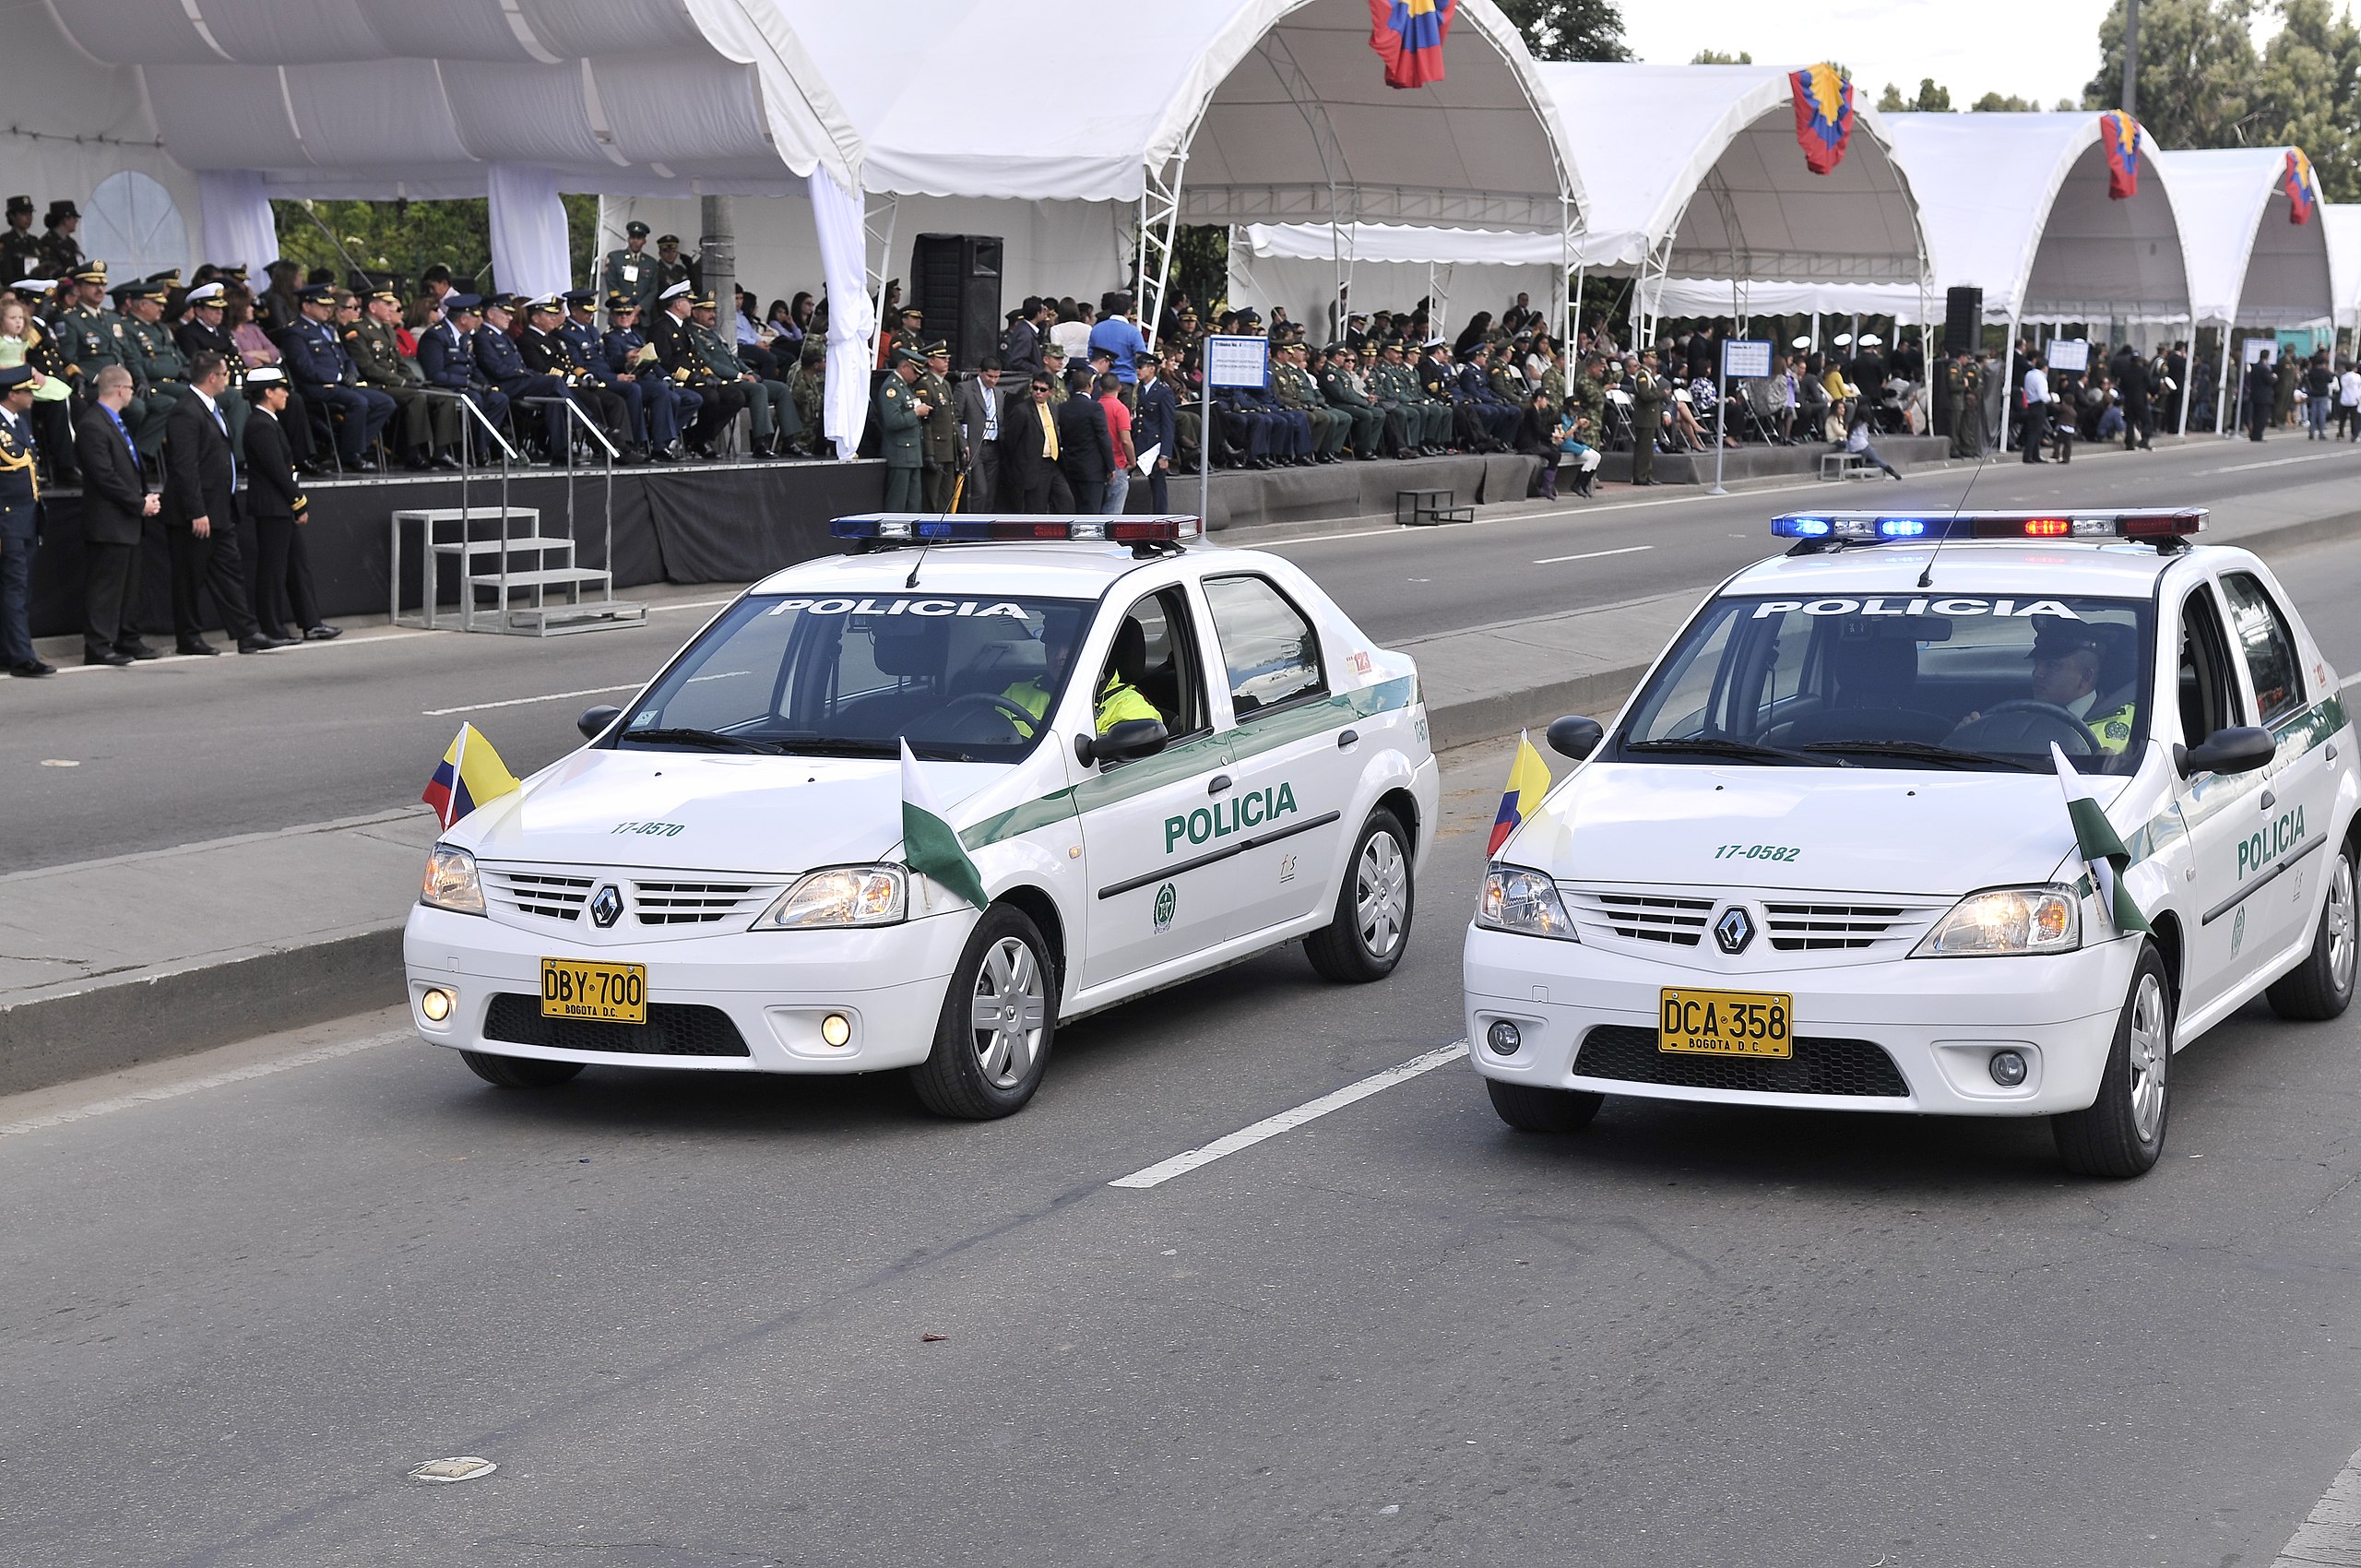 File:Bogotá - Carro de Policía.JPG - Wikimedia Commons